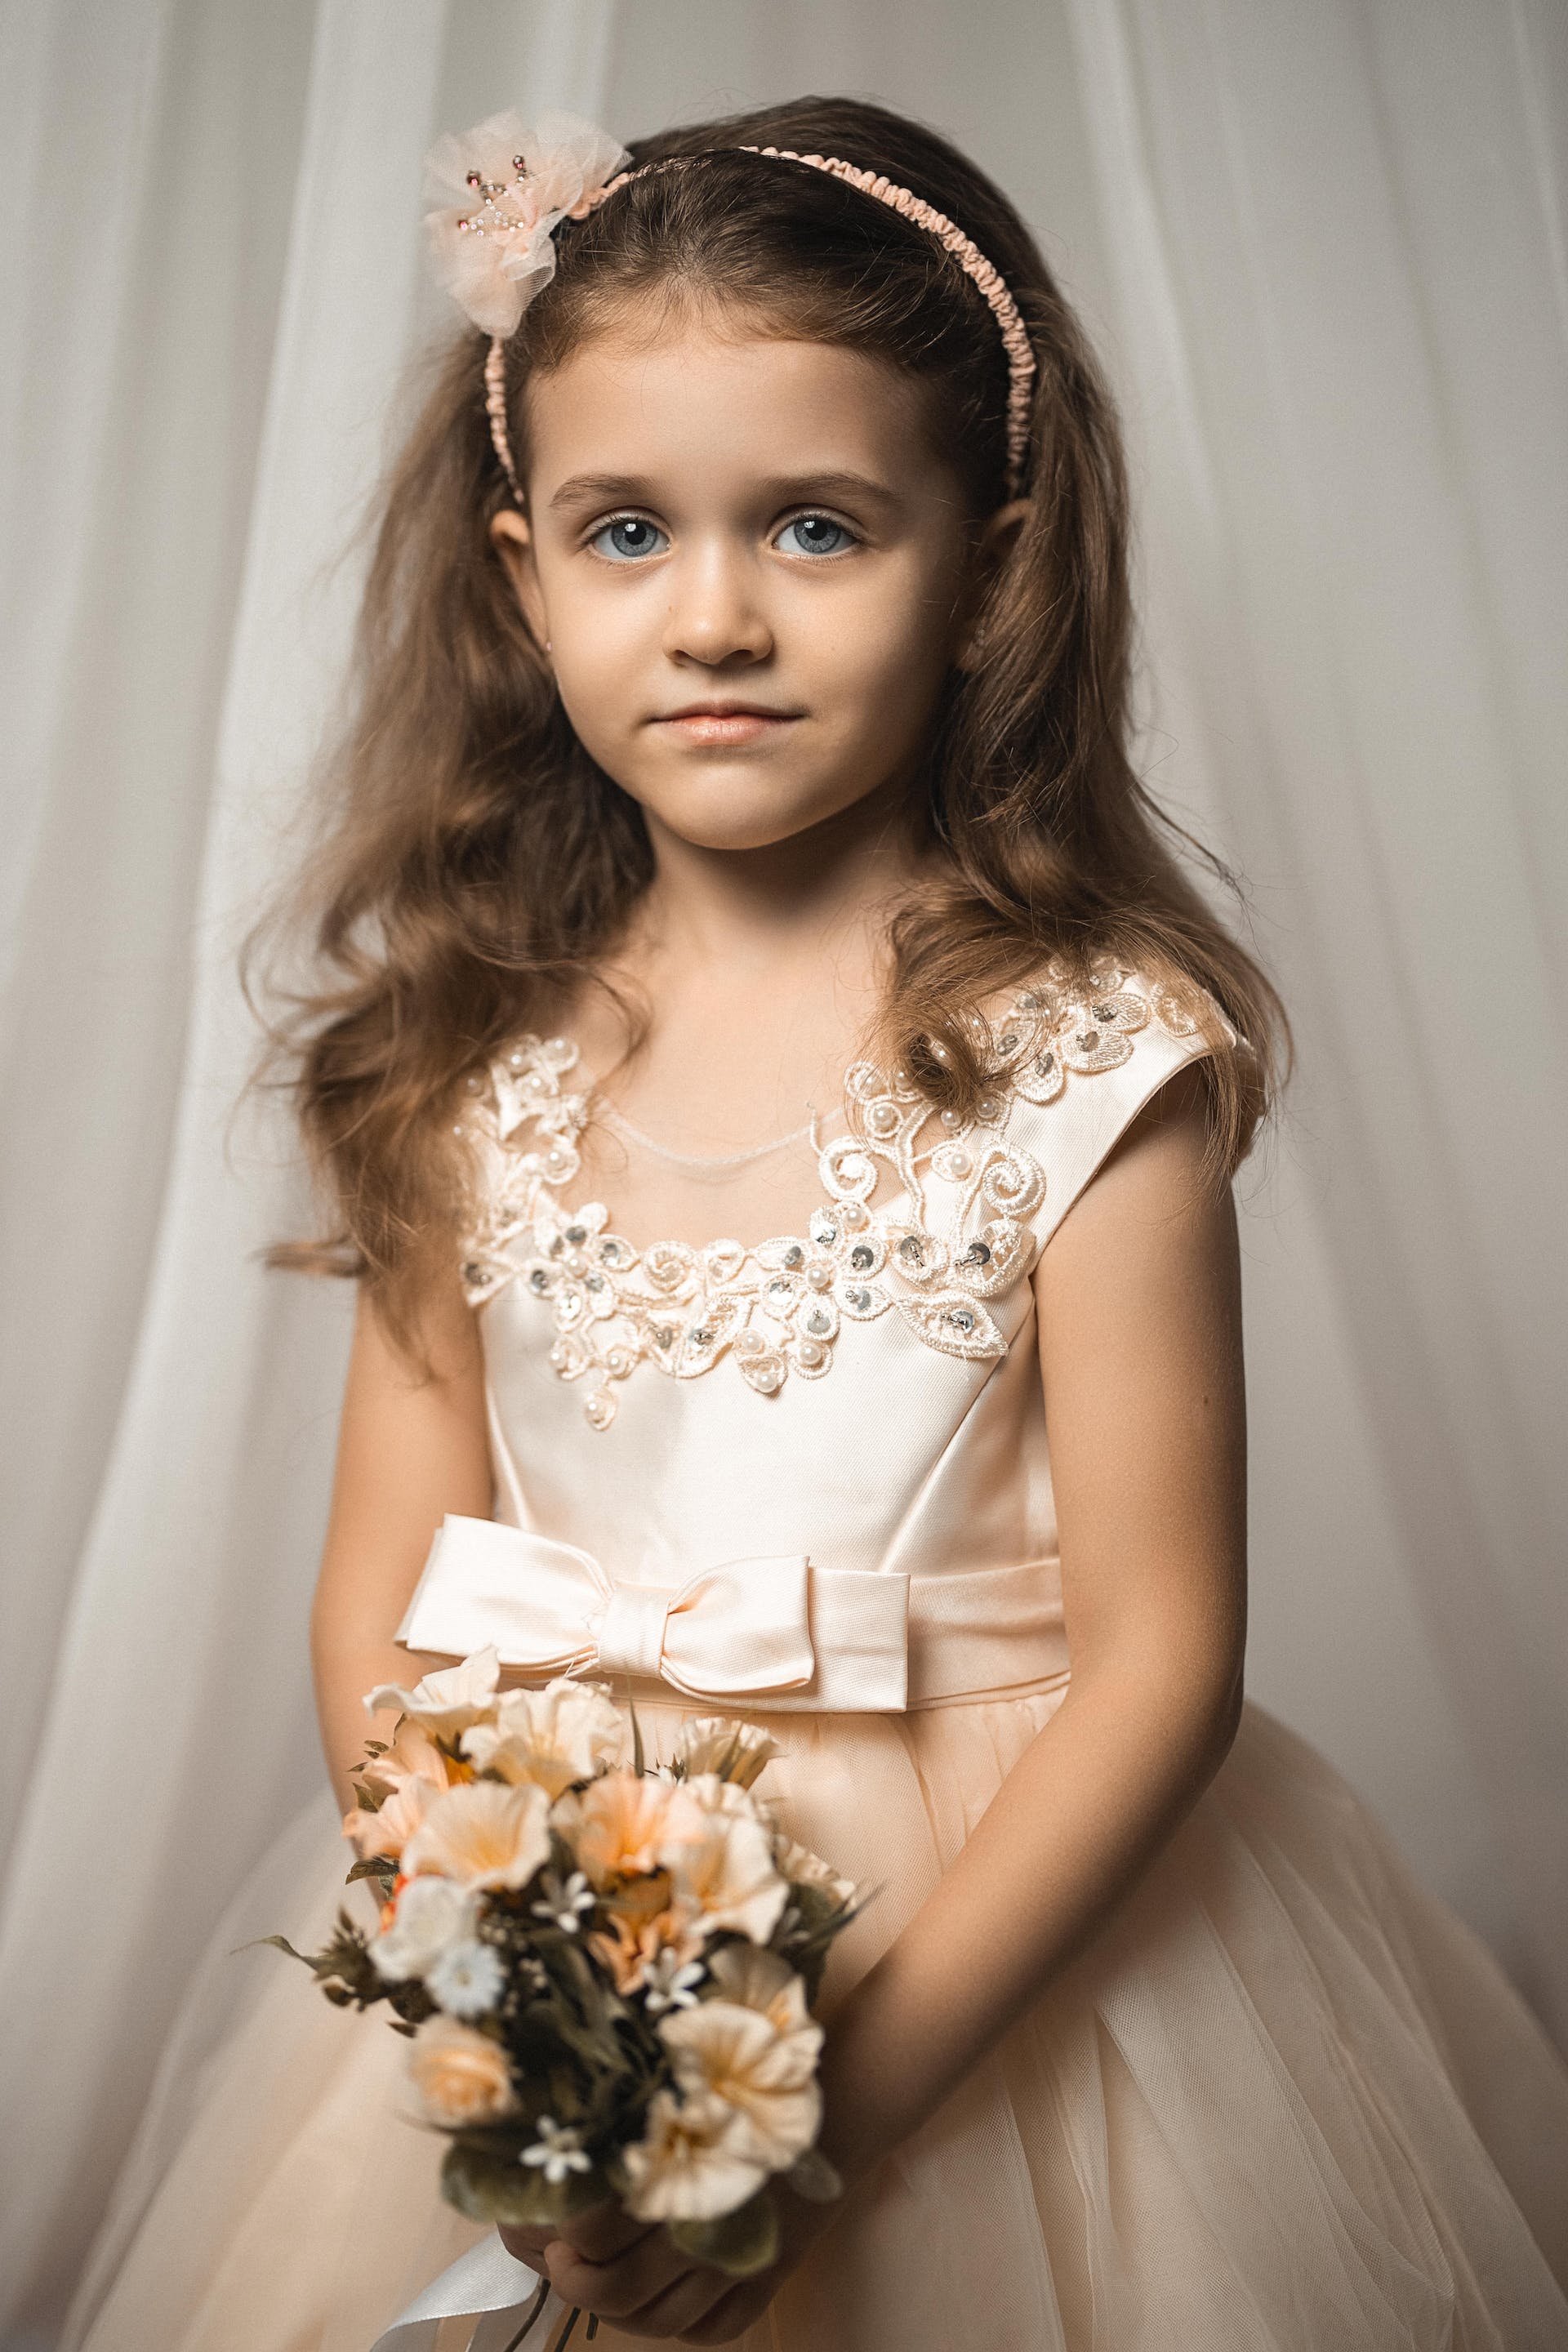 Little flower girl at wedding | Source: Pexels